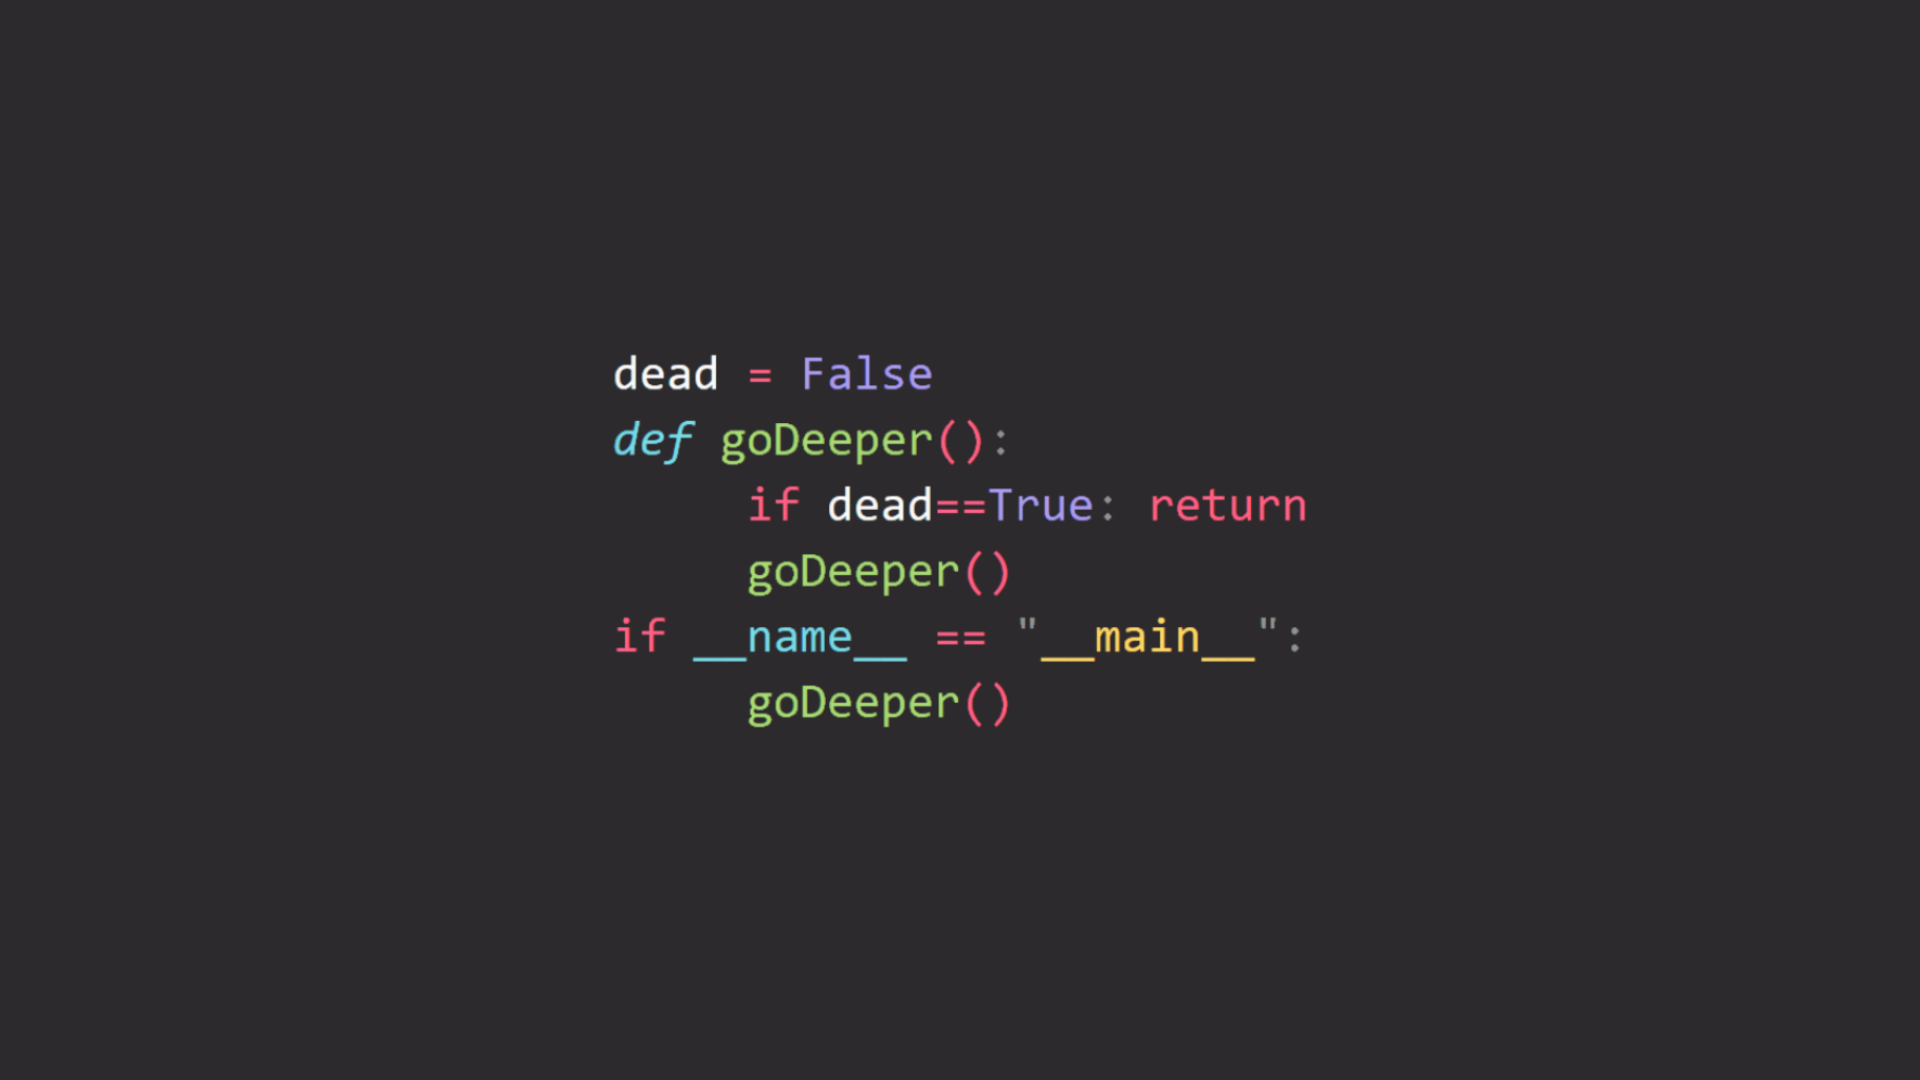 Coding (Programming) Wallpaper #6 by Arsen2005 on DeviantArt